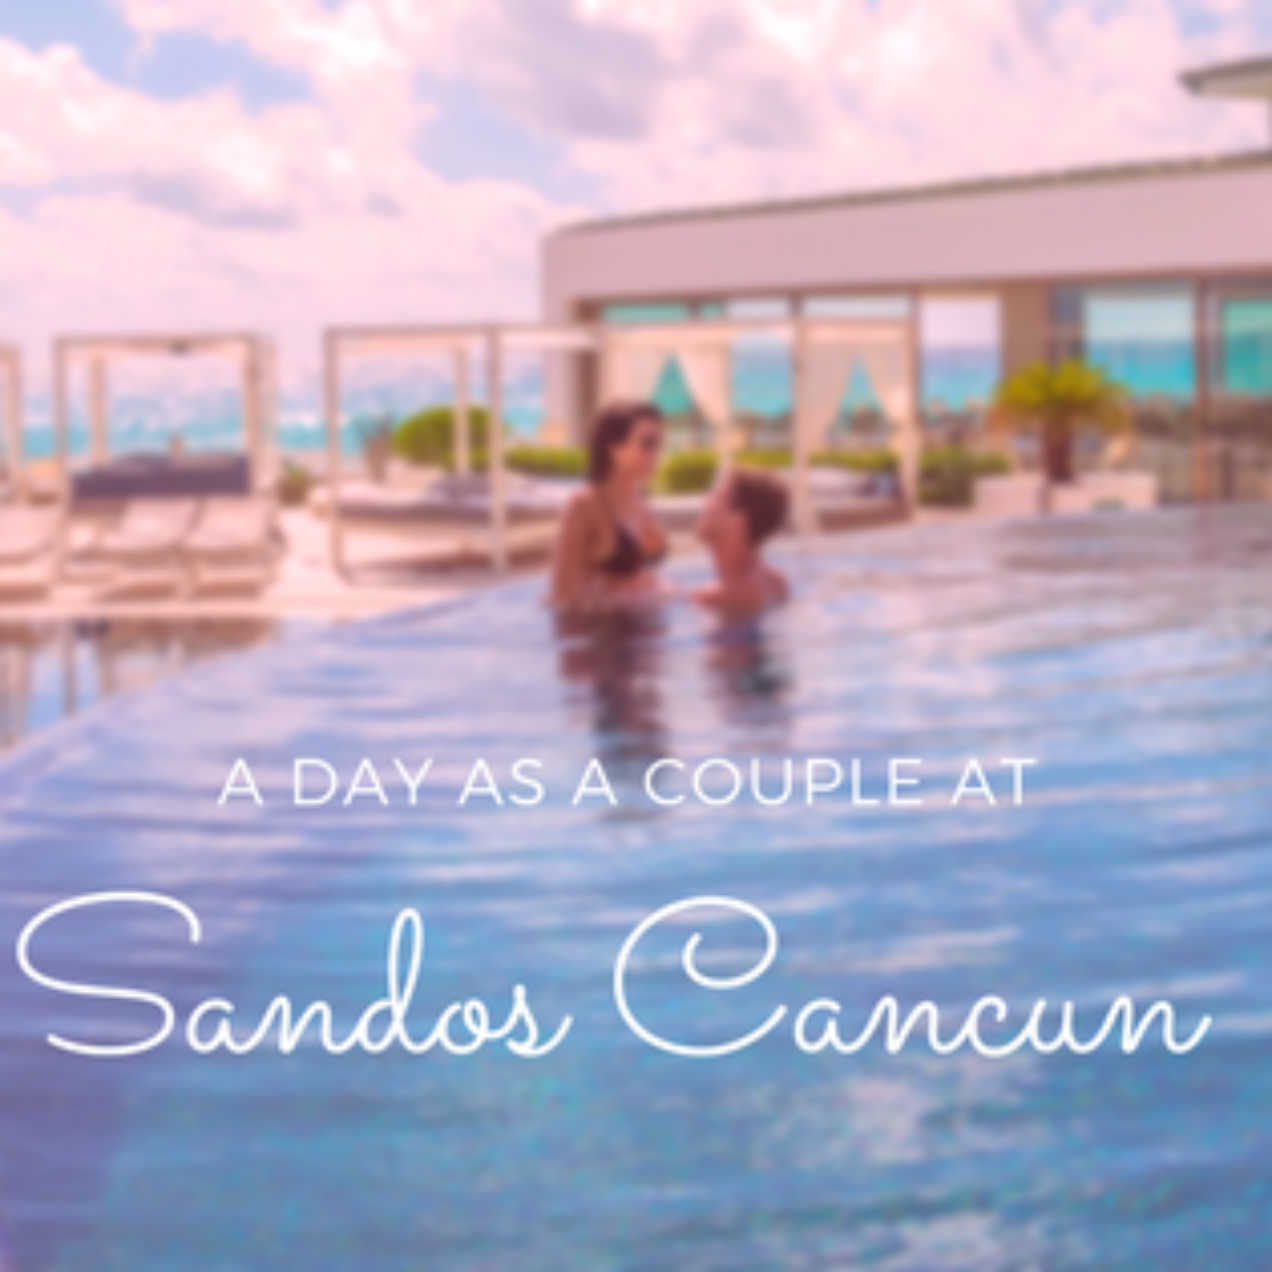 A Day as a Couple at Sandos Cancun